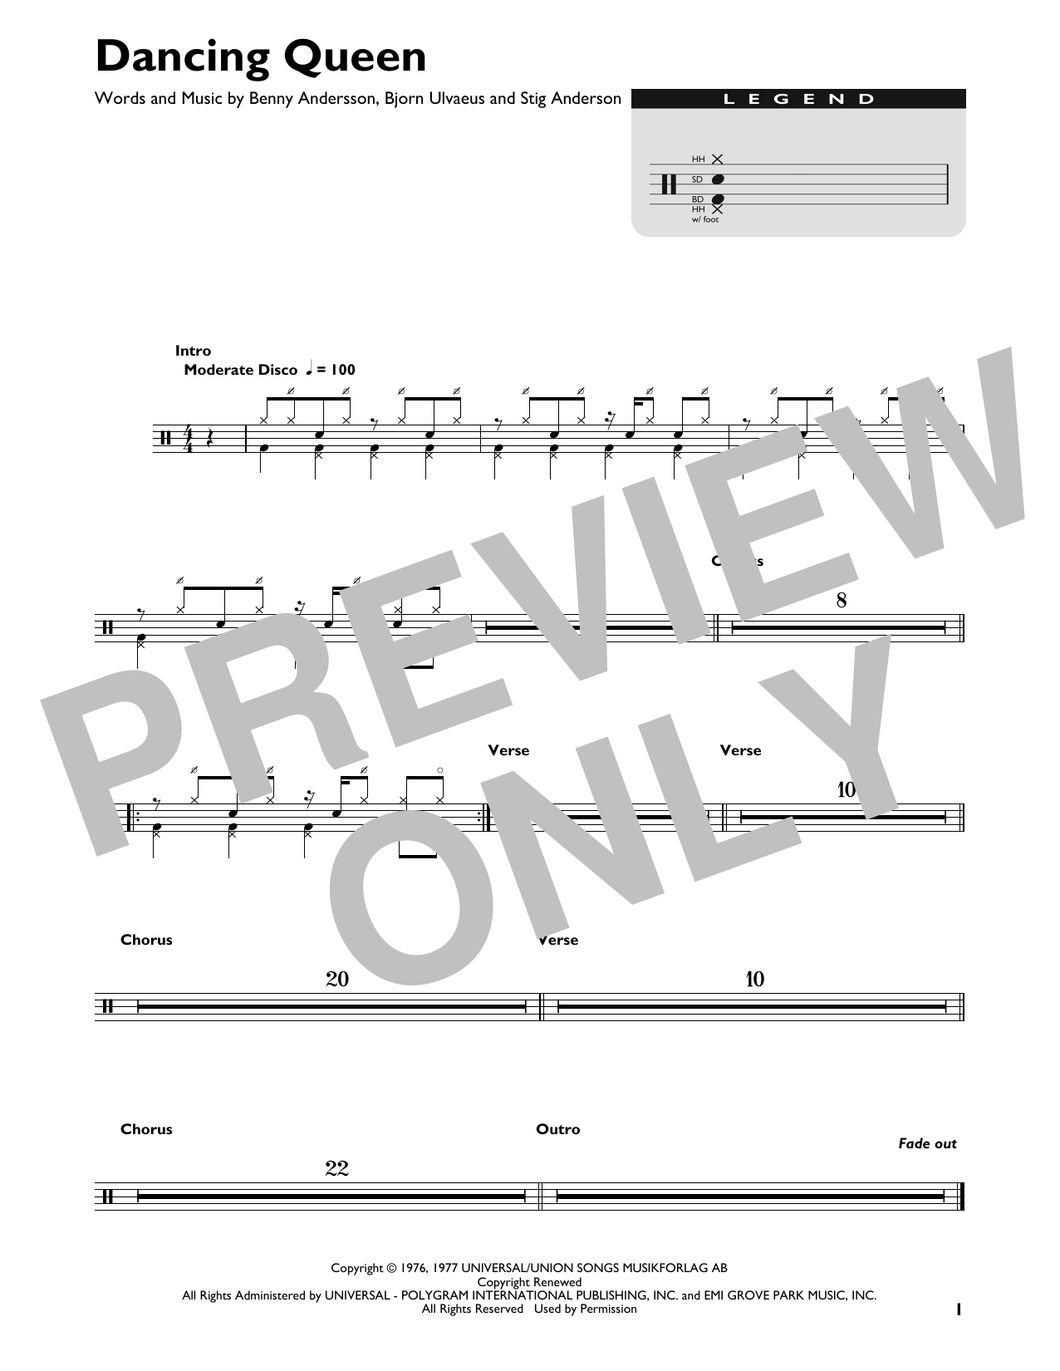 Dancing Queen - ABBA - Full Drum Transcription / Drum Sheet Music - SheetMusicDirect DT